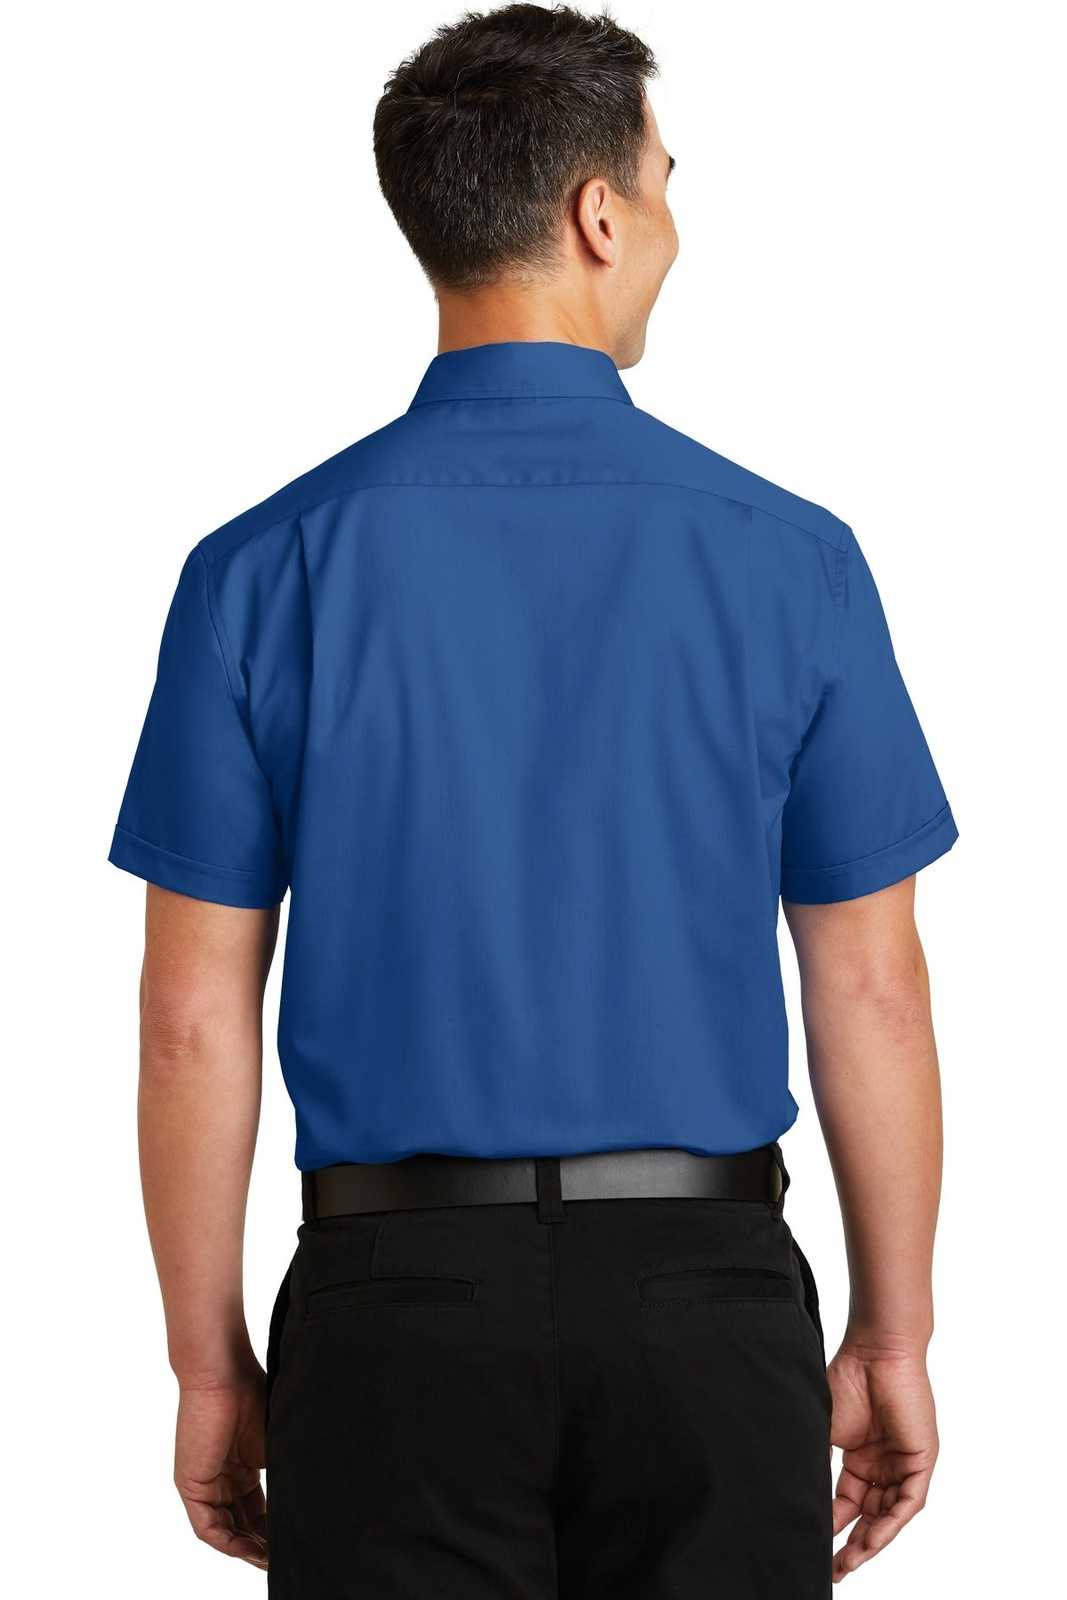 Port Authority S664 Short Sleeve Superpro Twill Shirt - True Blue - HIT a Double - 1